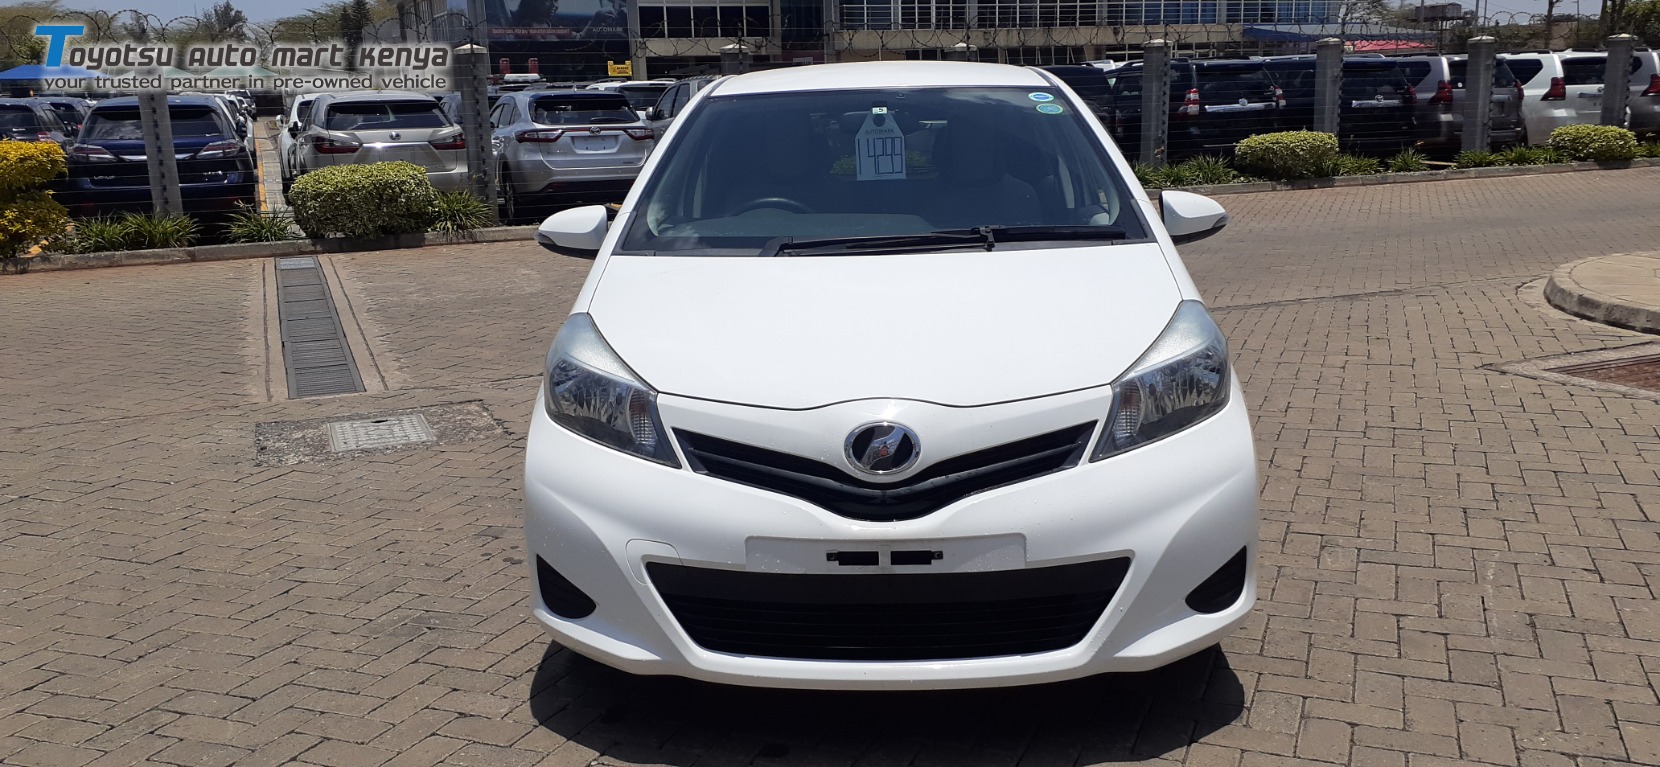 2013 Toyota Vitz | Used Car For Sale - Toyotsu Auto Mart Kenya